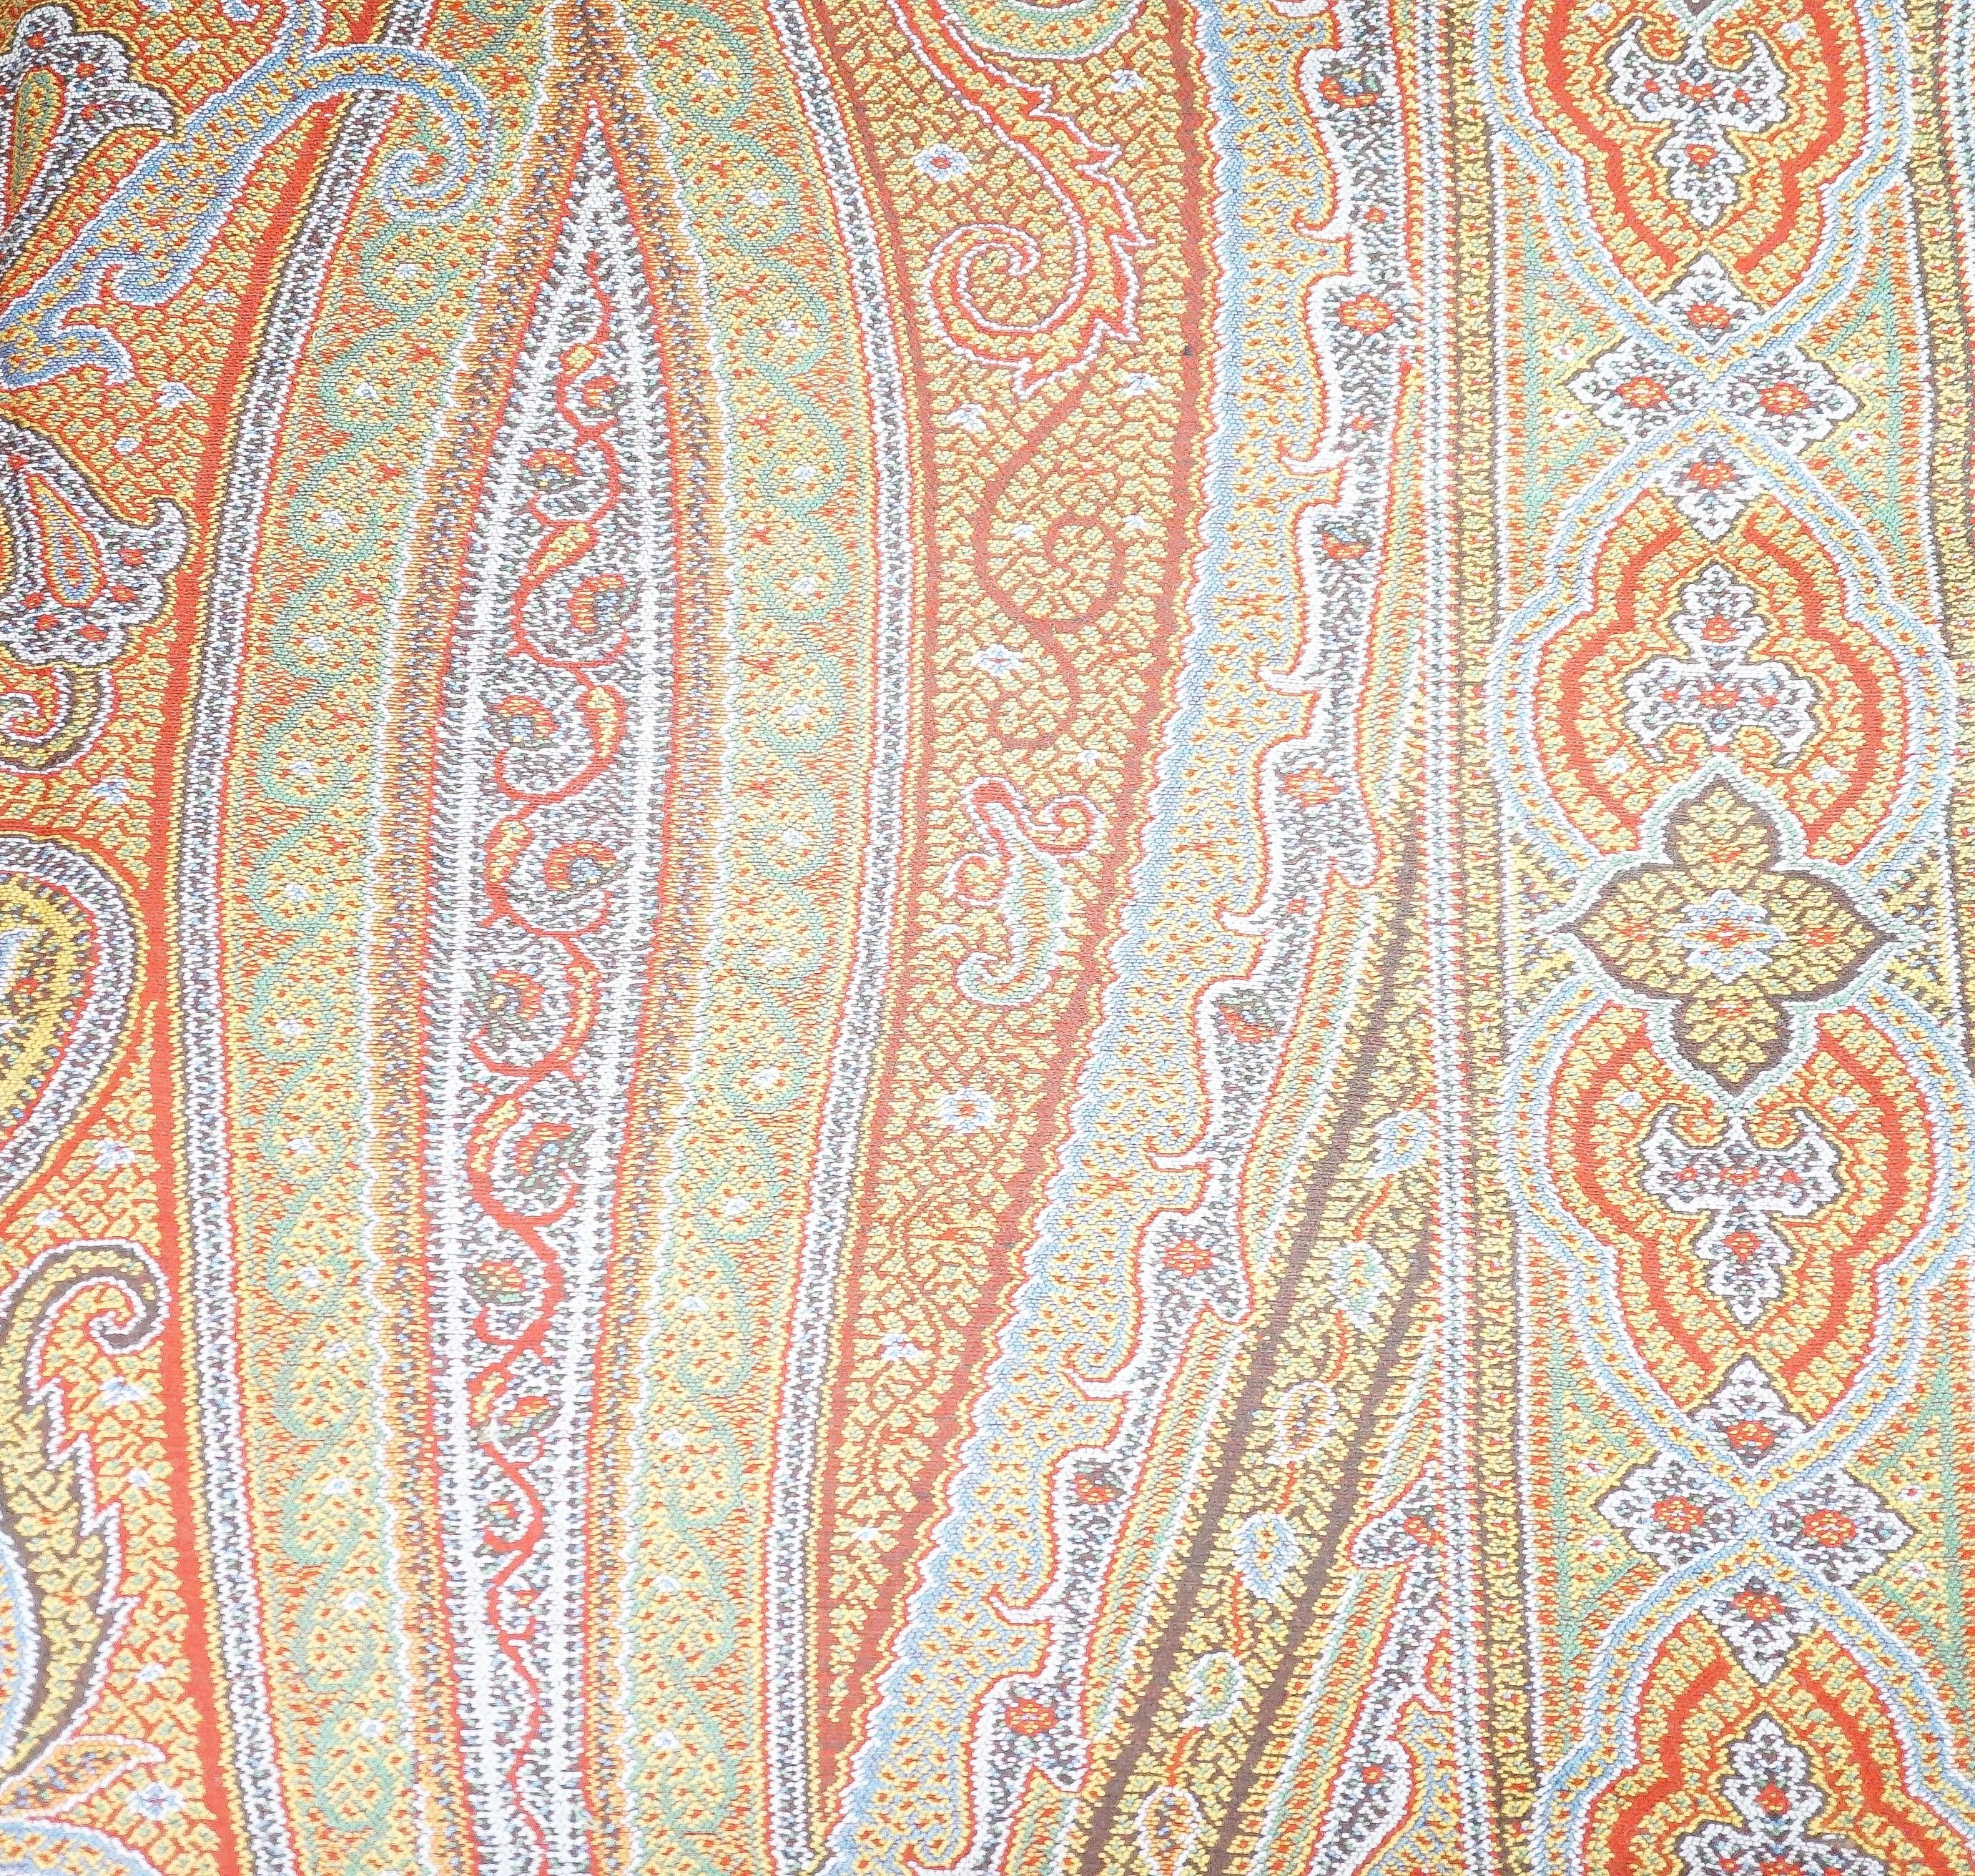 A large wool Paisley shawl, 340 x 164cm